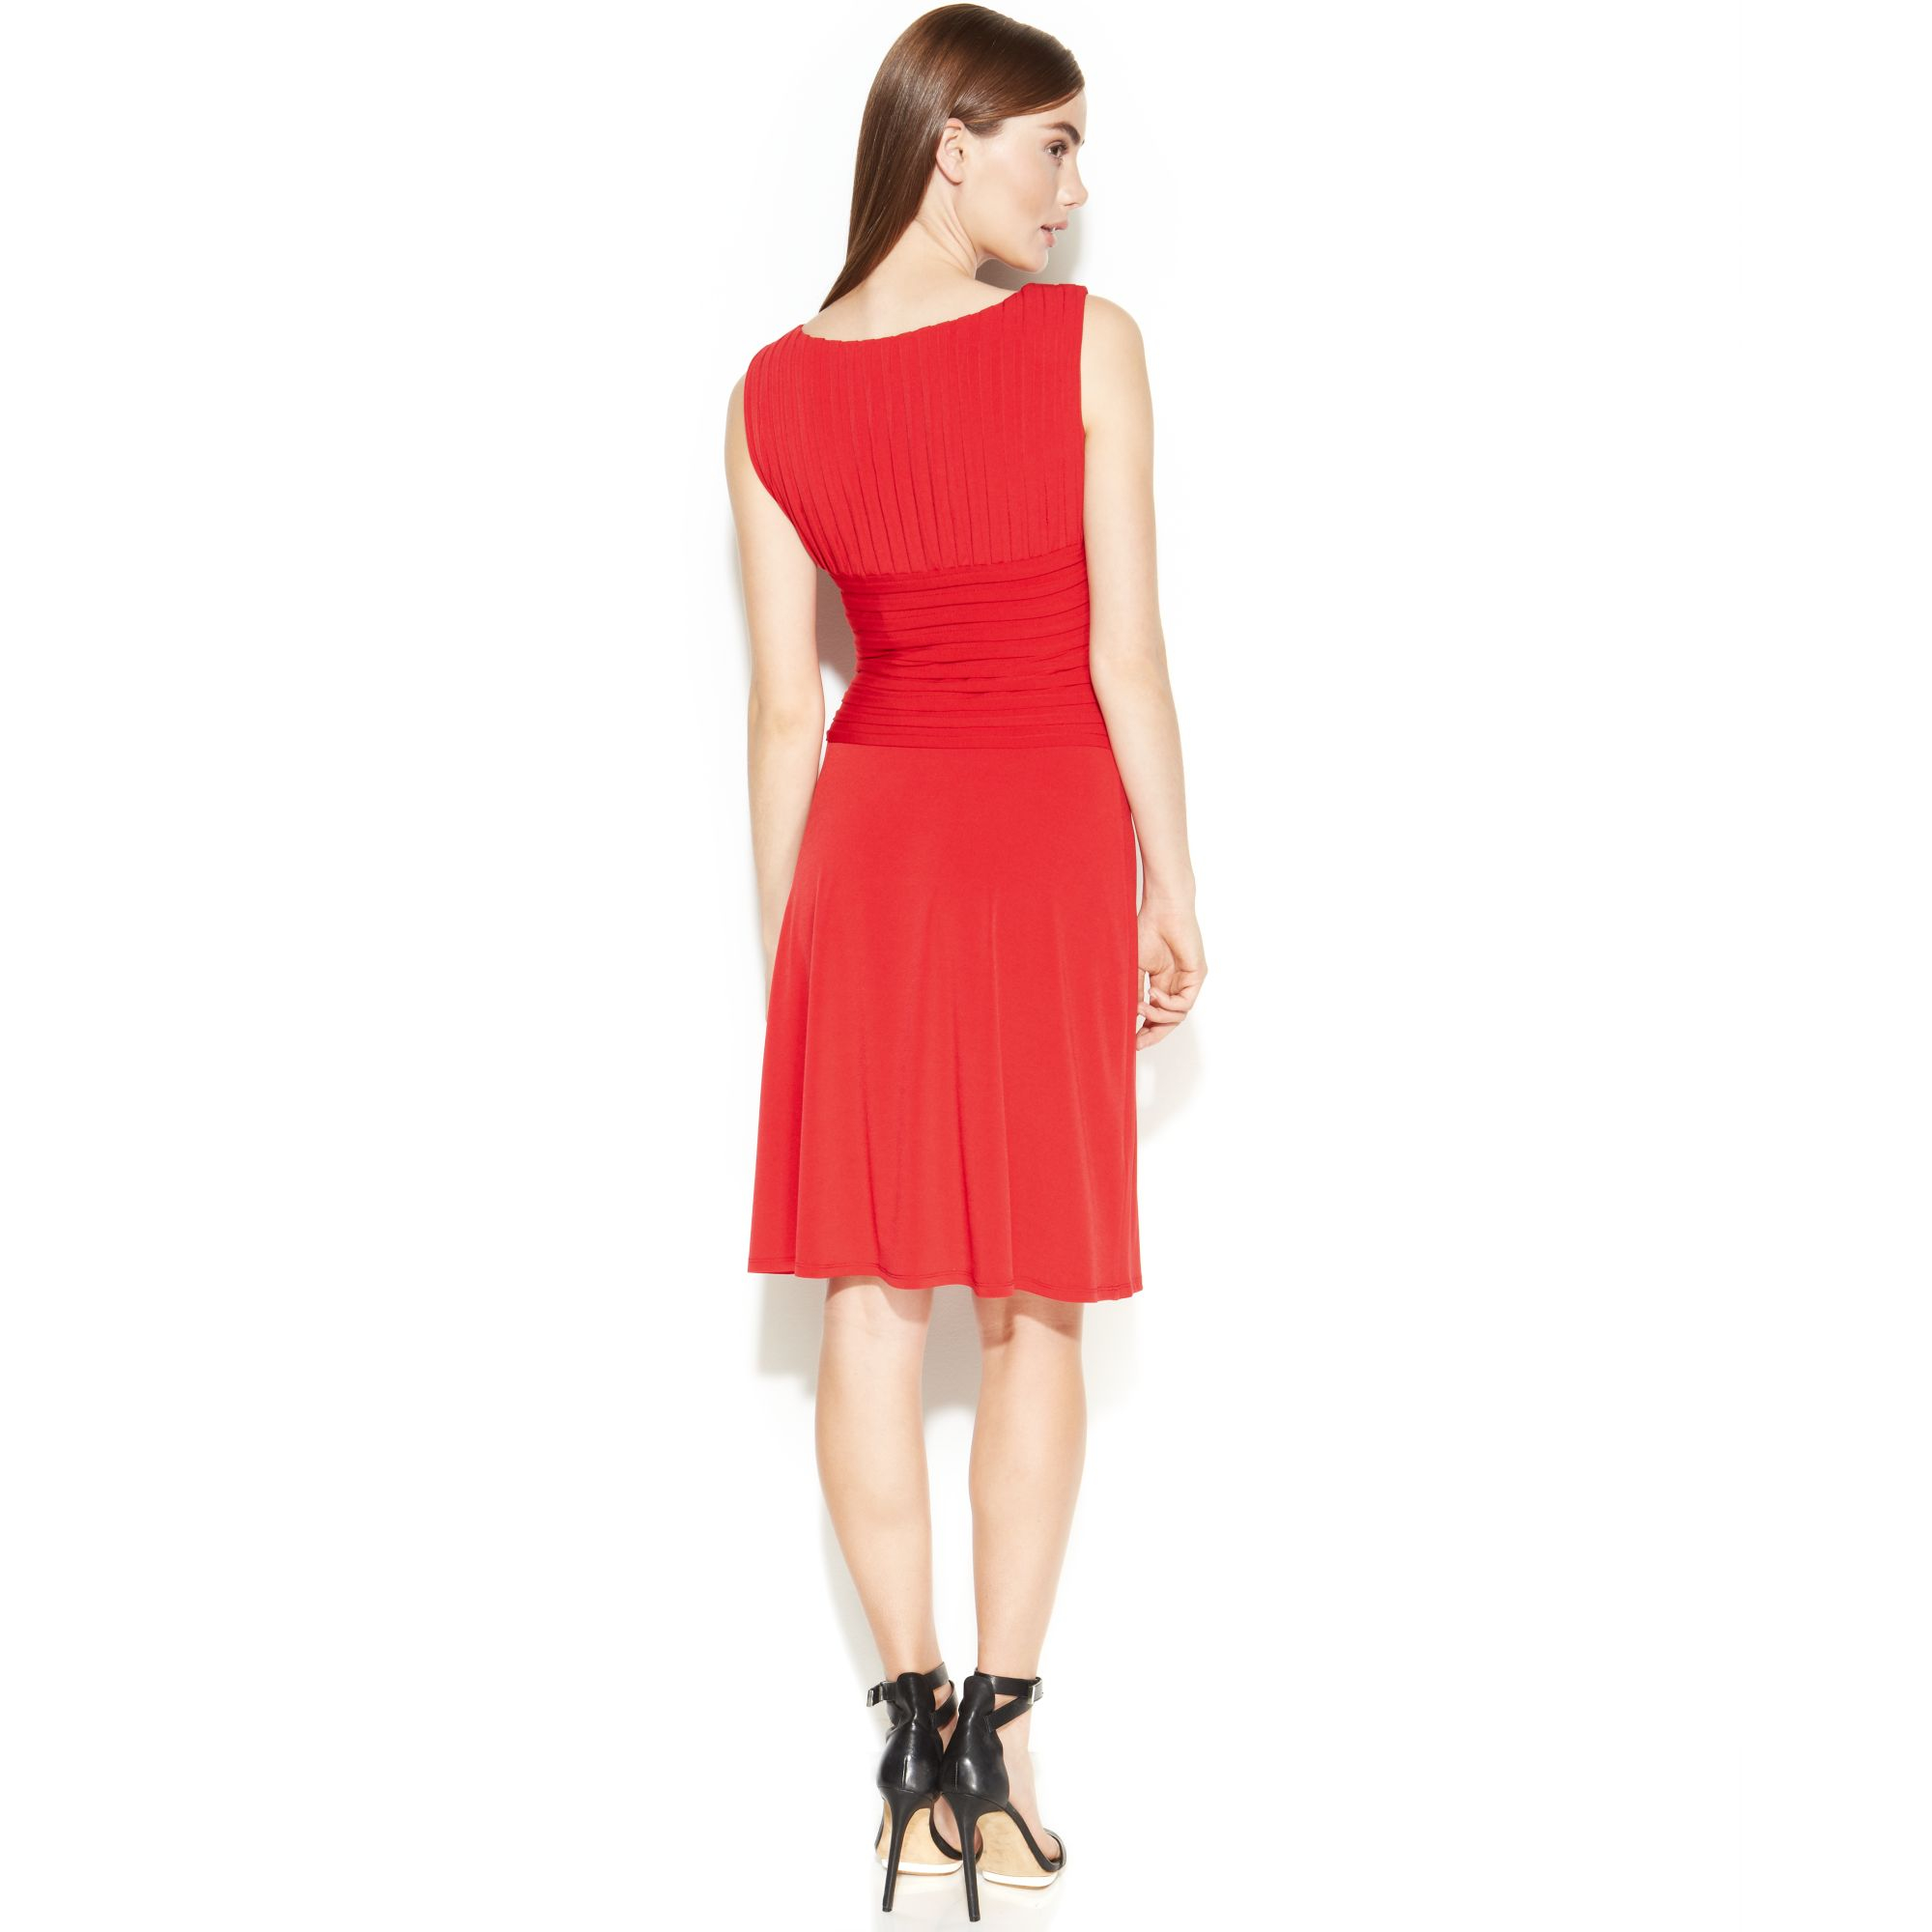 Lyst - Calvin Klein Sleeveless Shutter Pleat Dress in Red